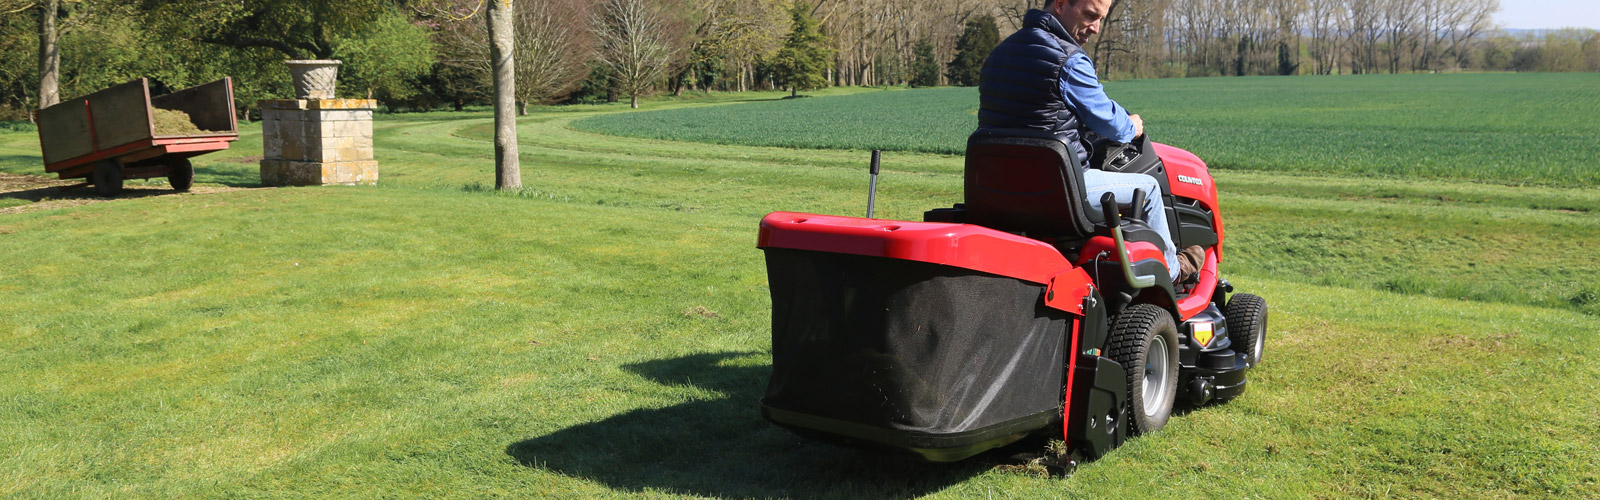 Countax lawn garden tractor mower accessory scarifier brush cassette in use